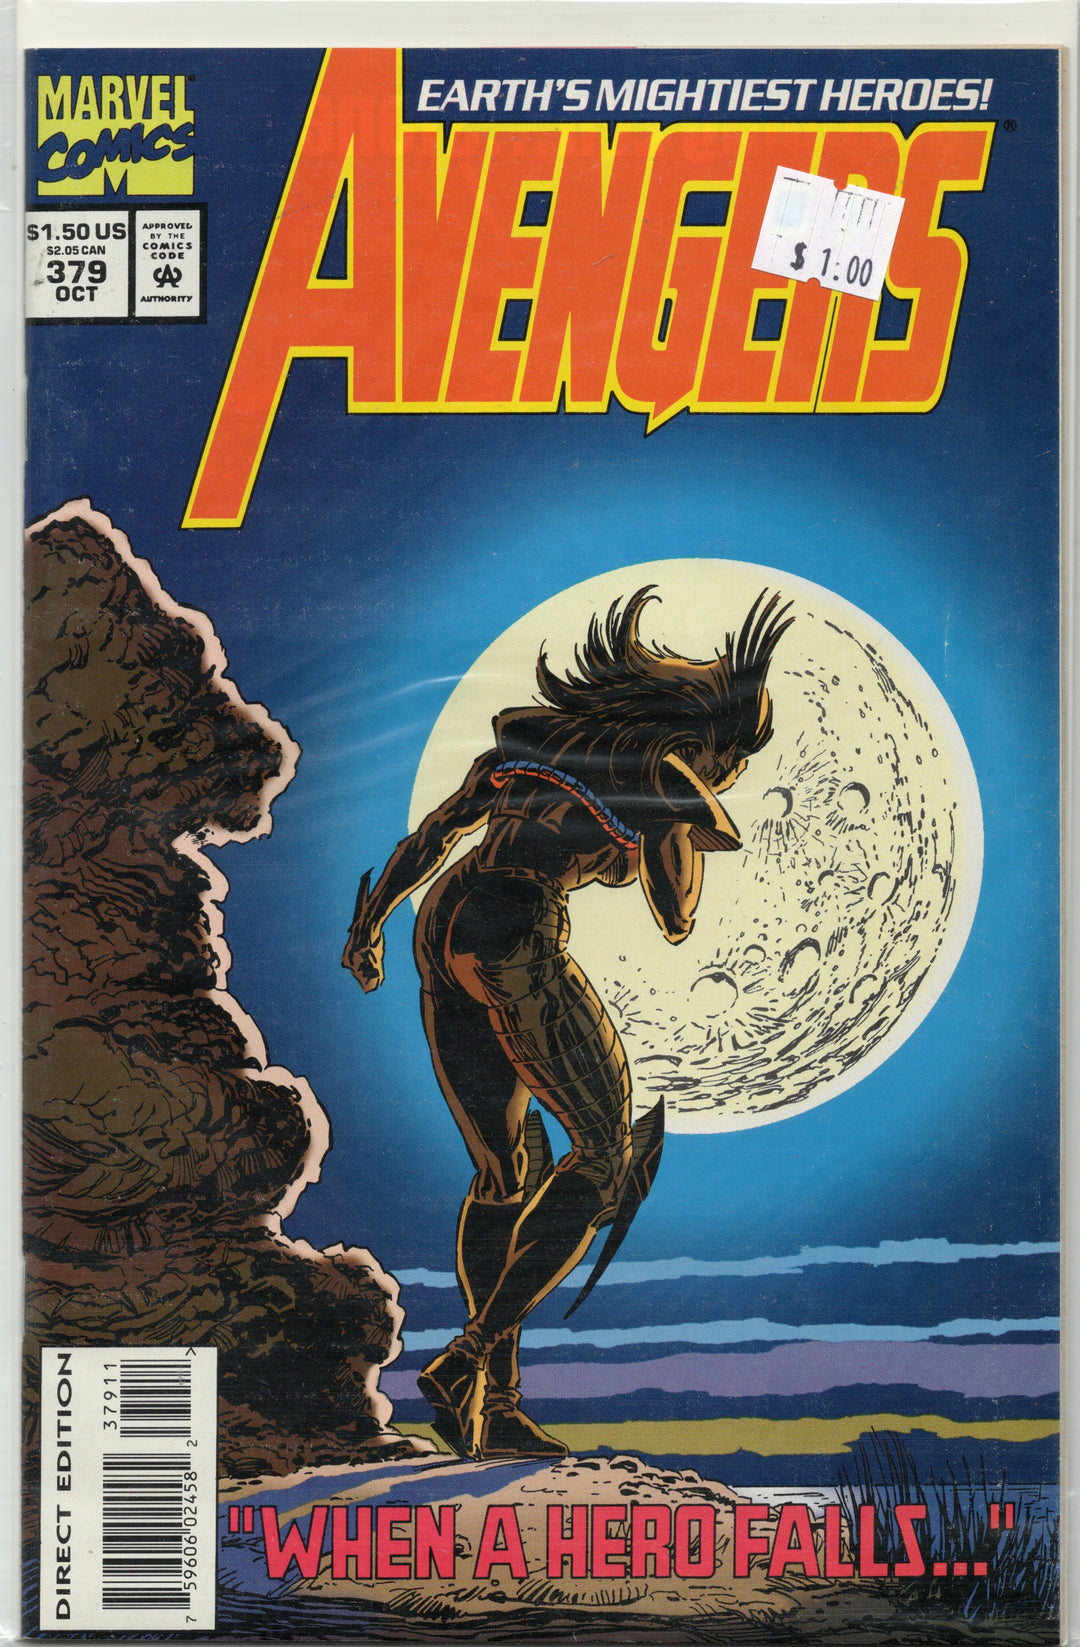 The Avengers #379